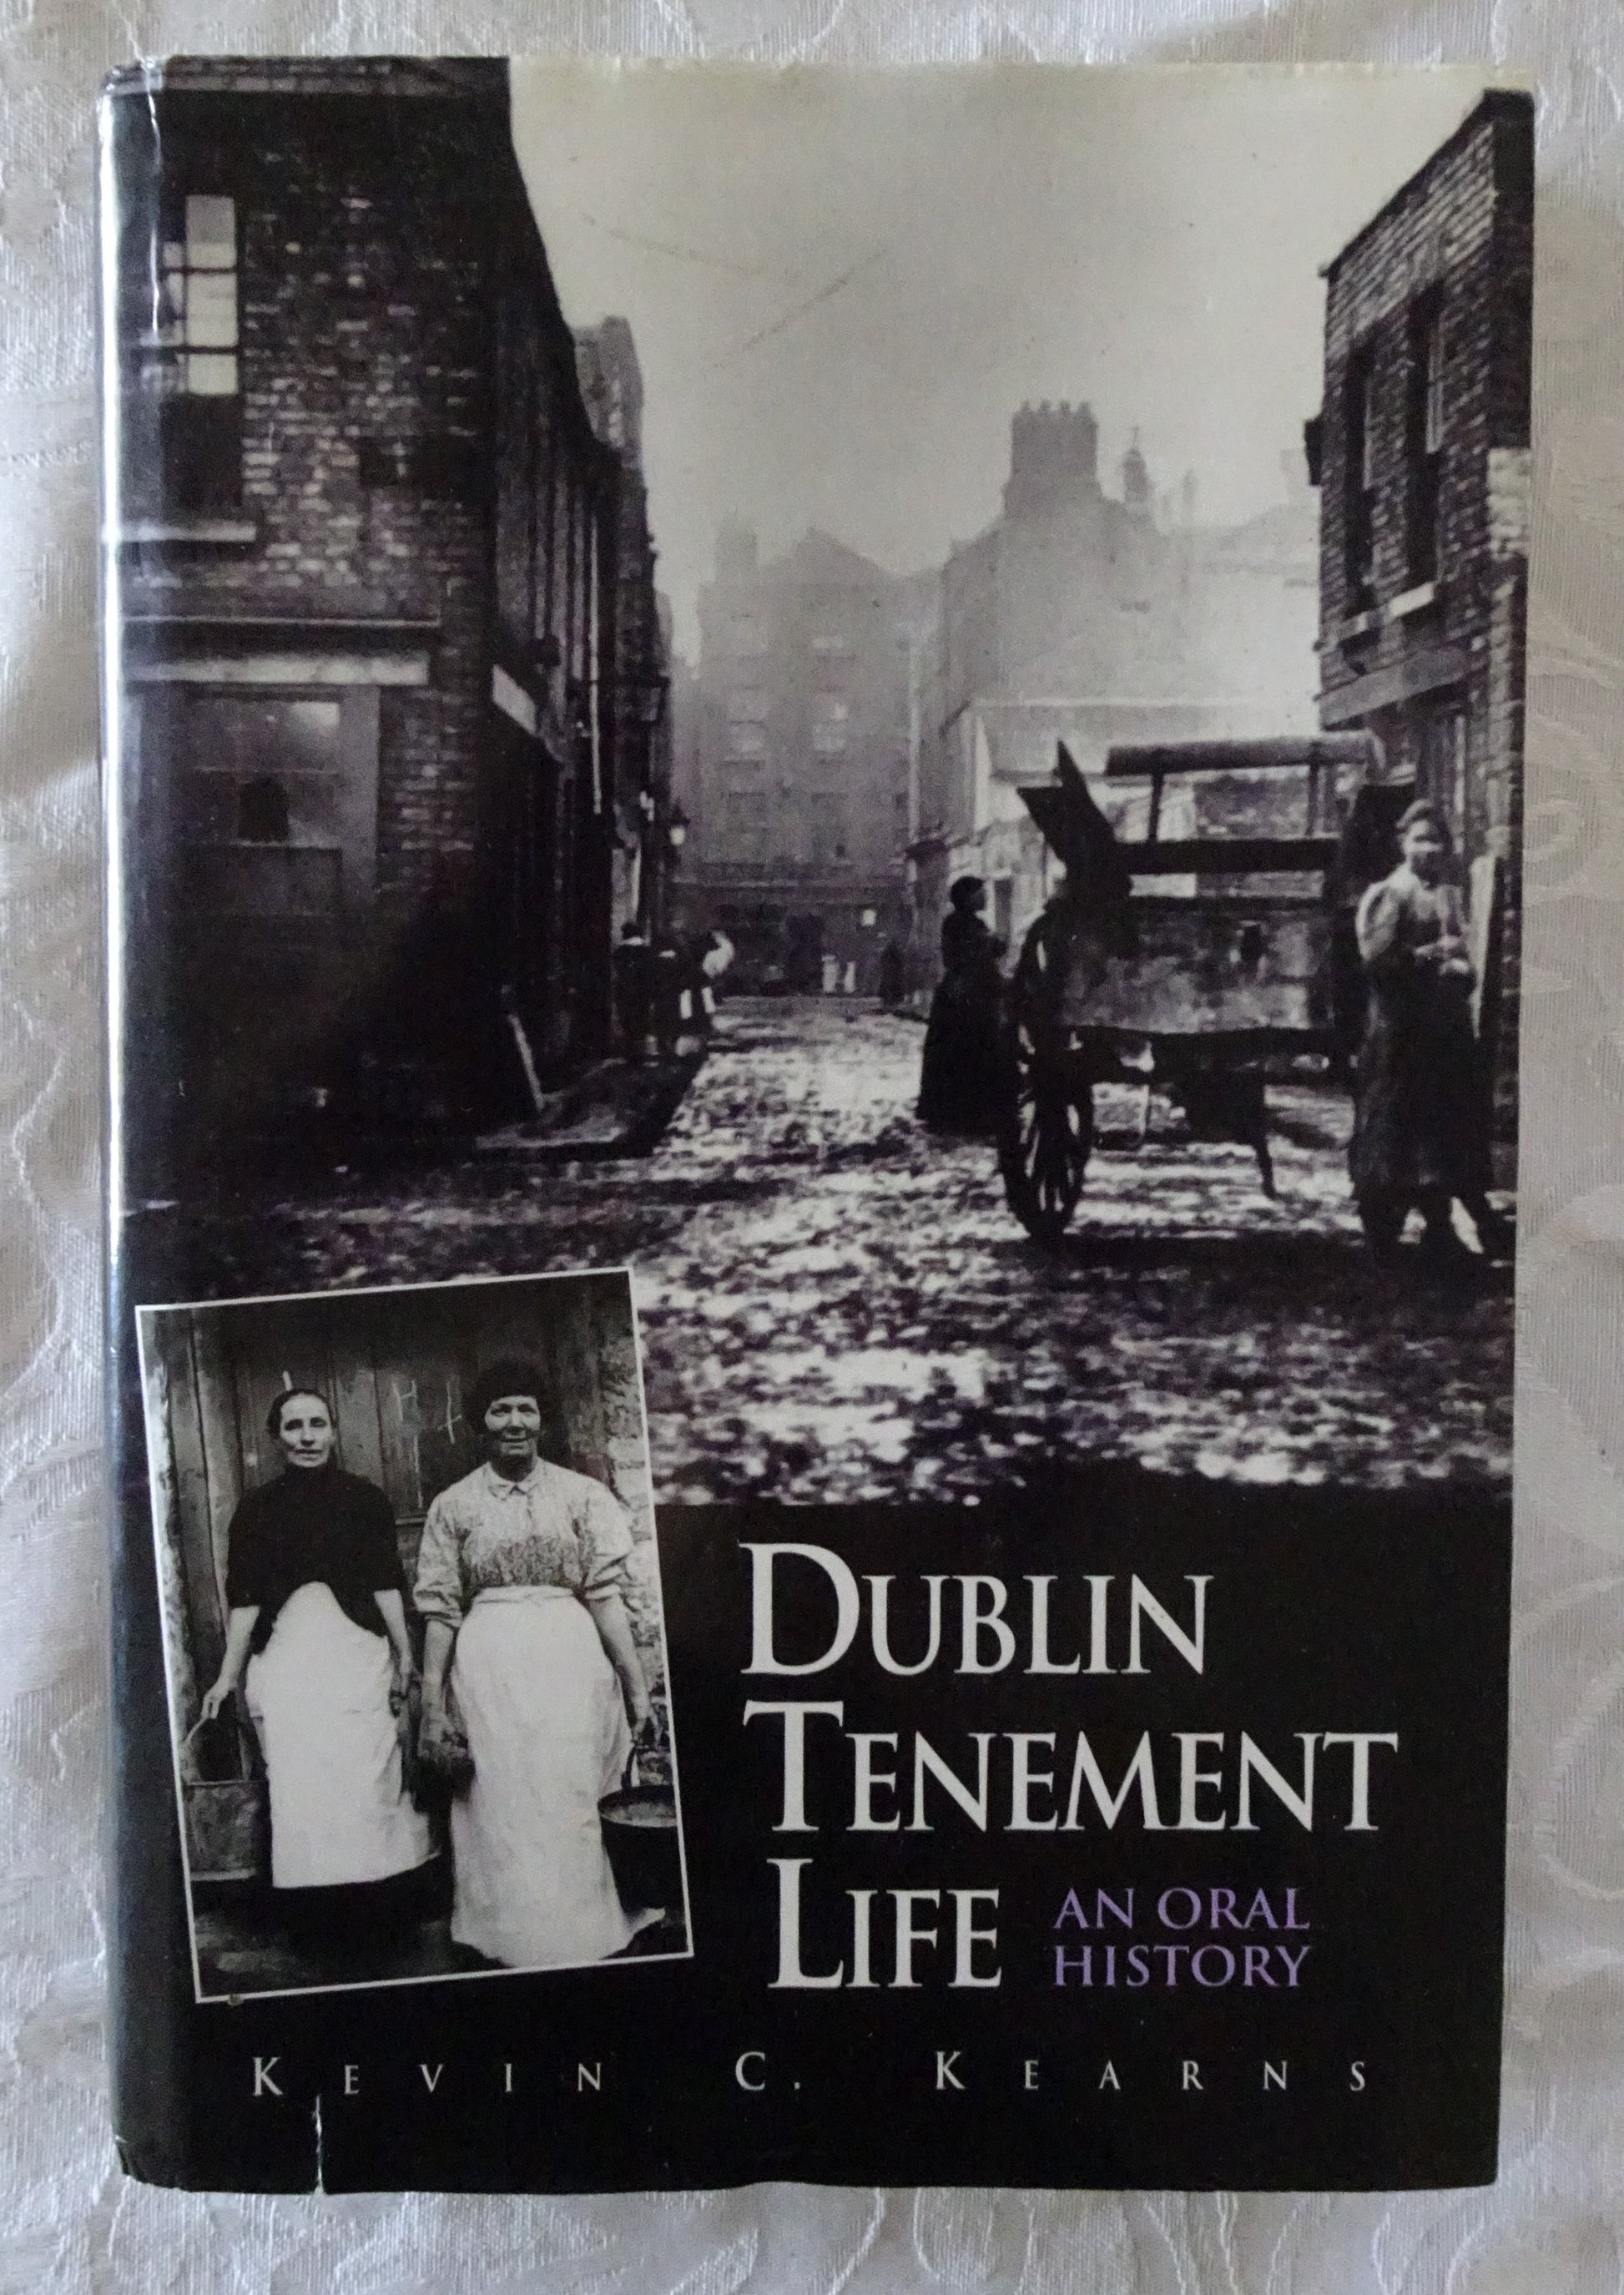 Dublin Tenement Life by Kevin C. Kearns